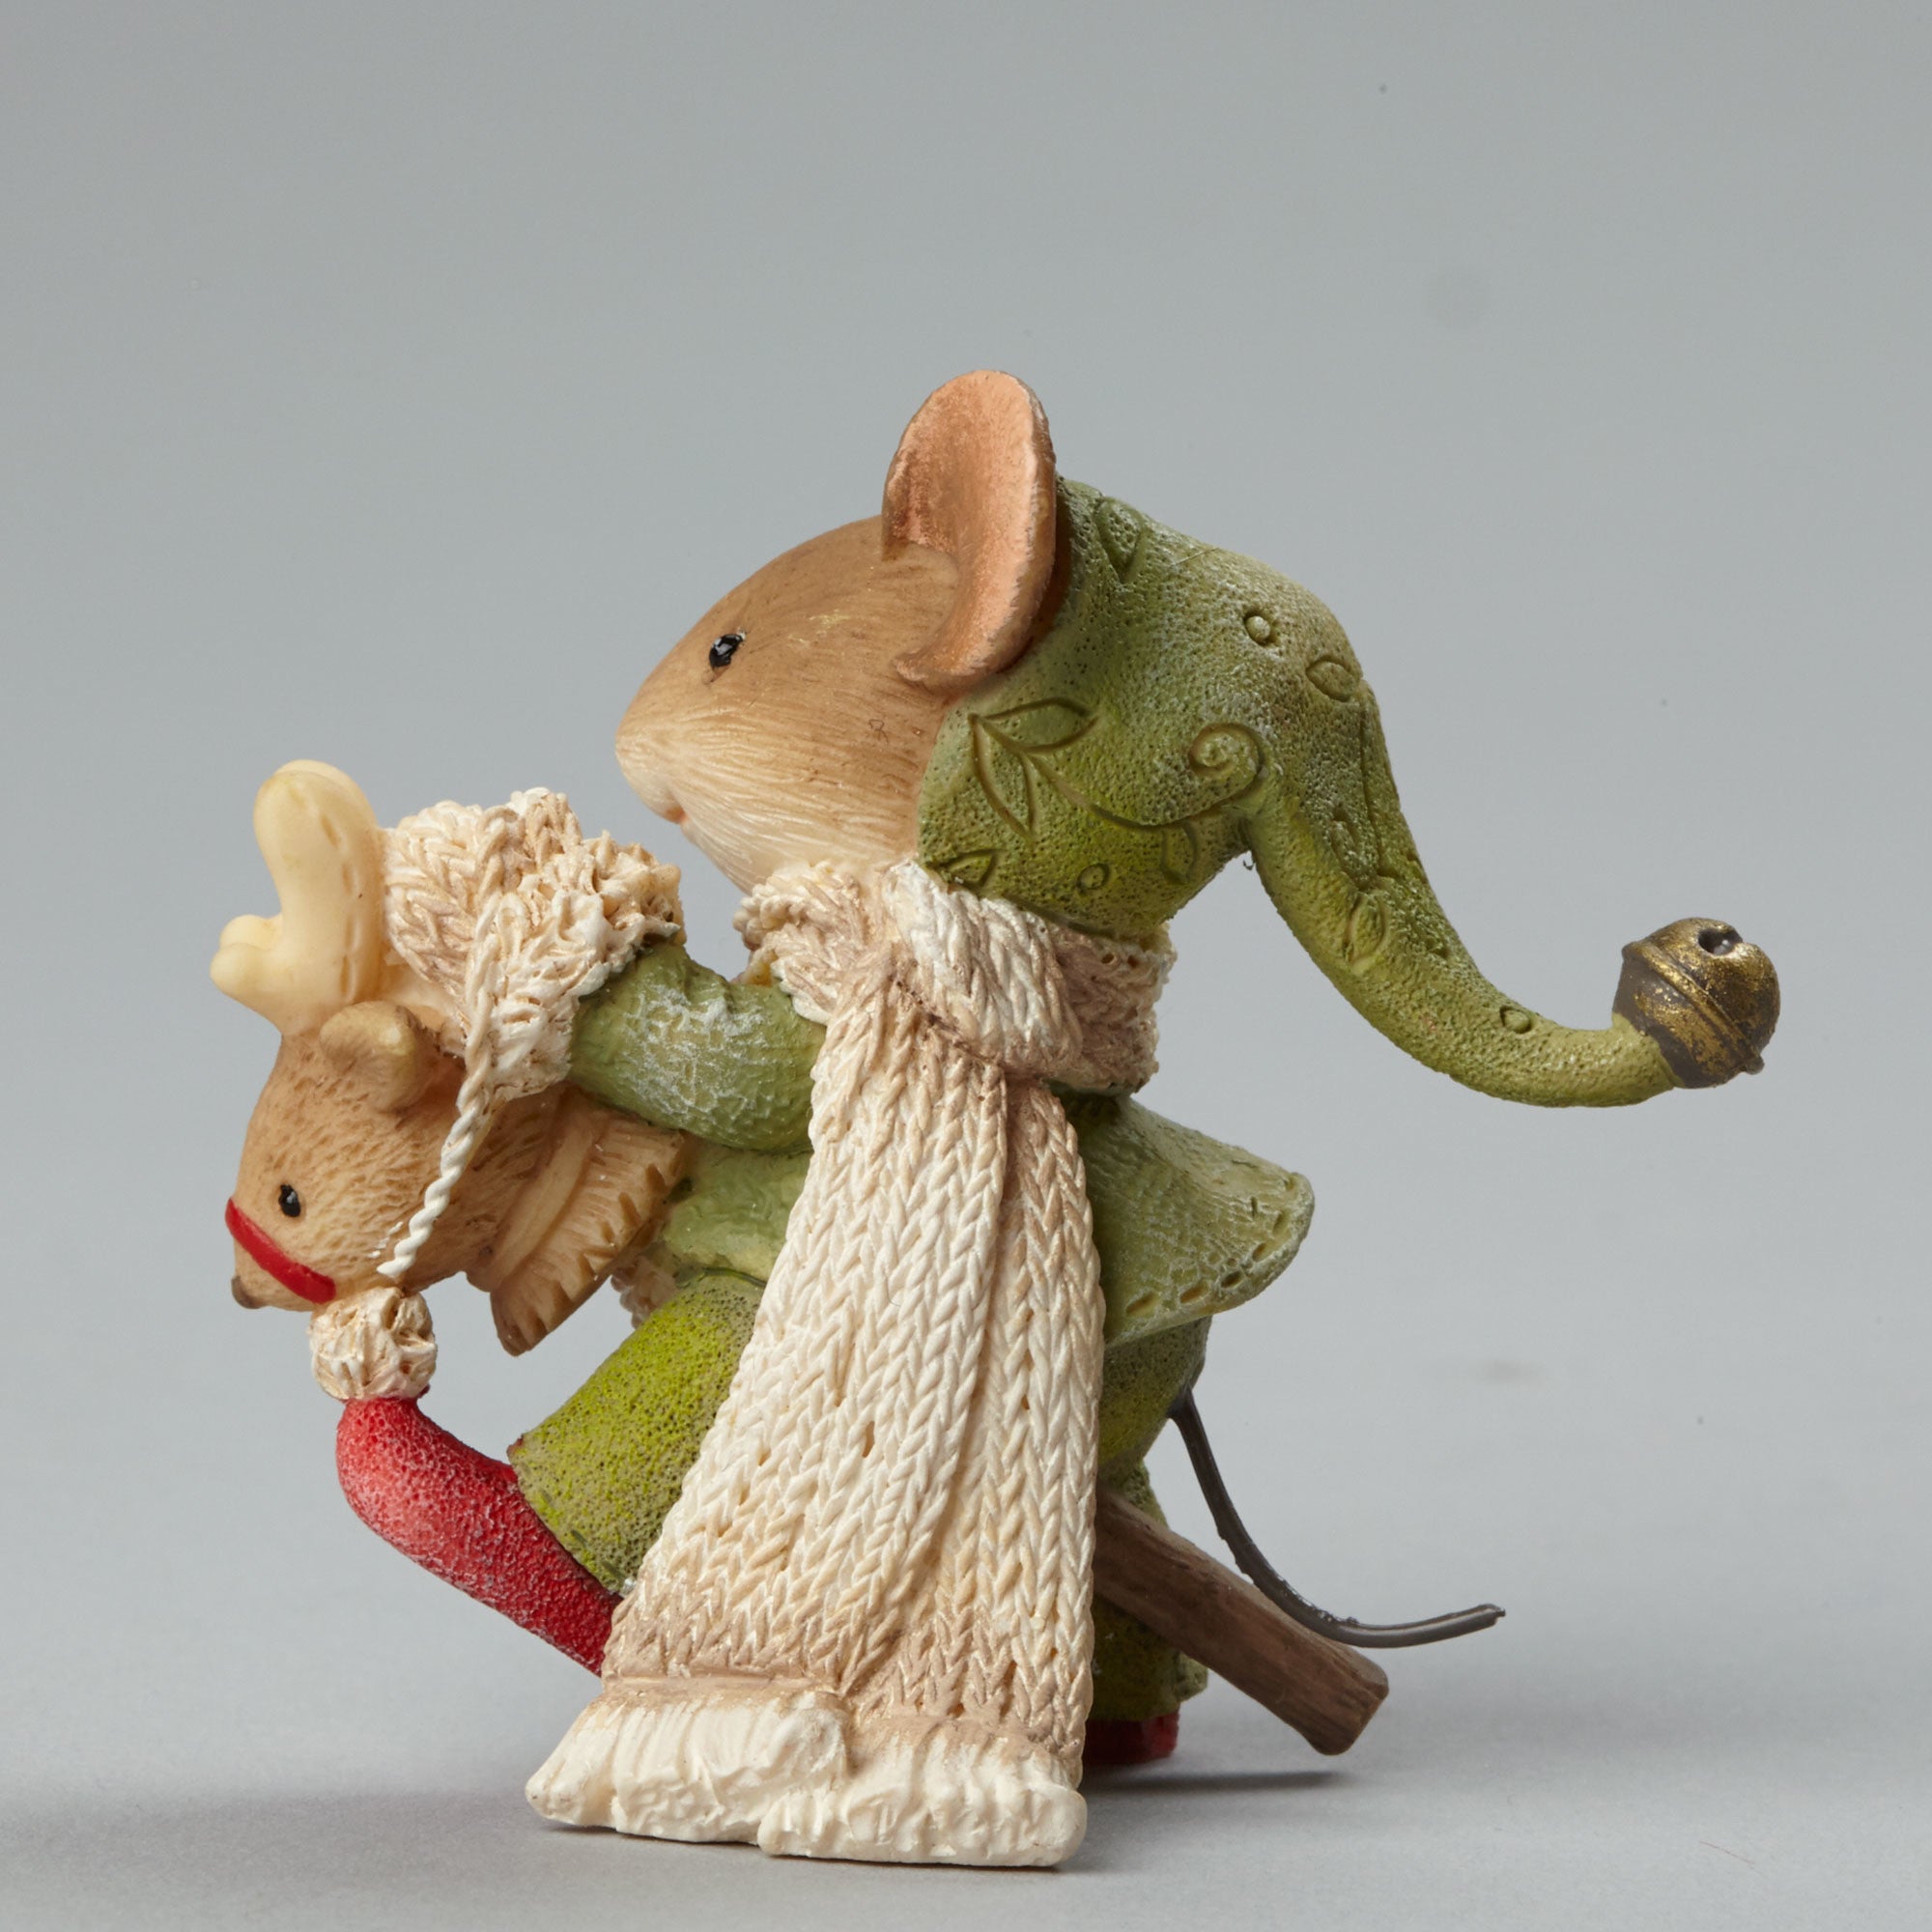 Mouse on Toy Reindeer Figurine - Backside